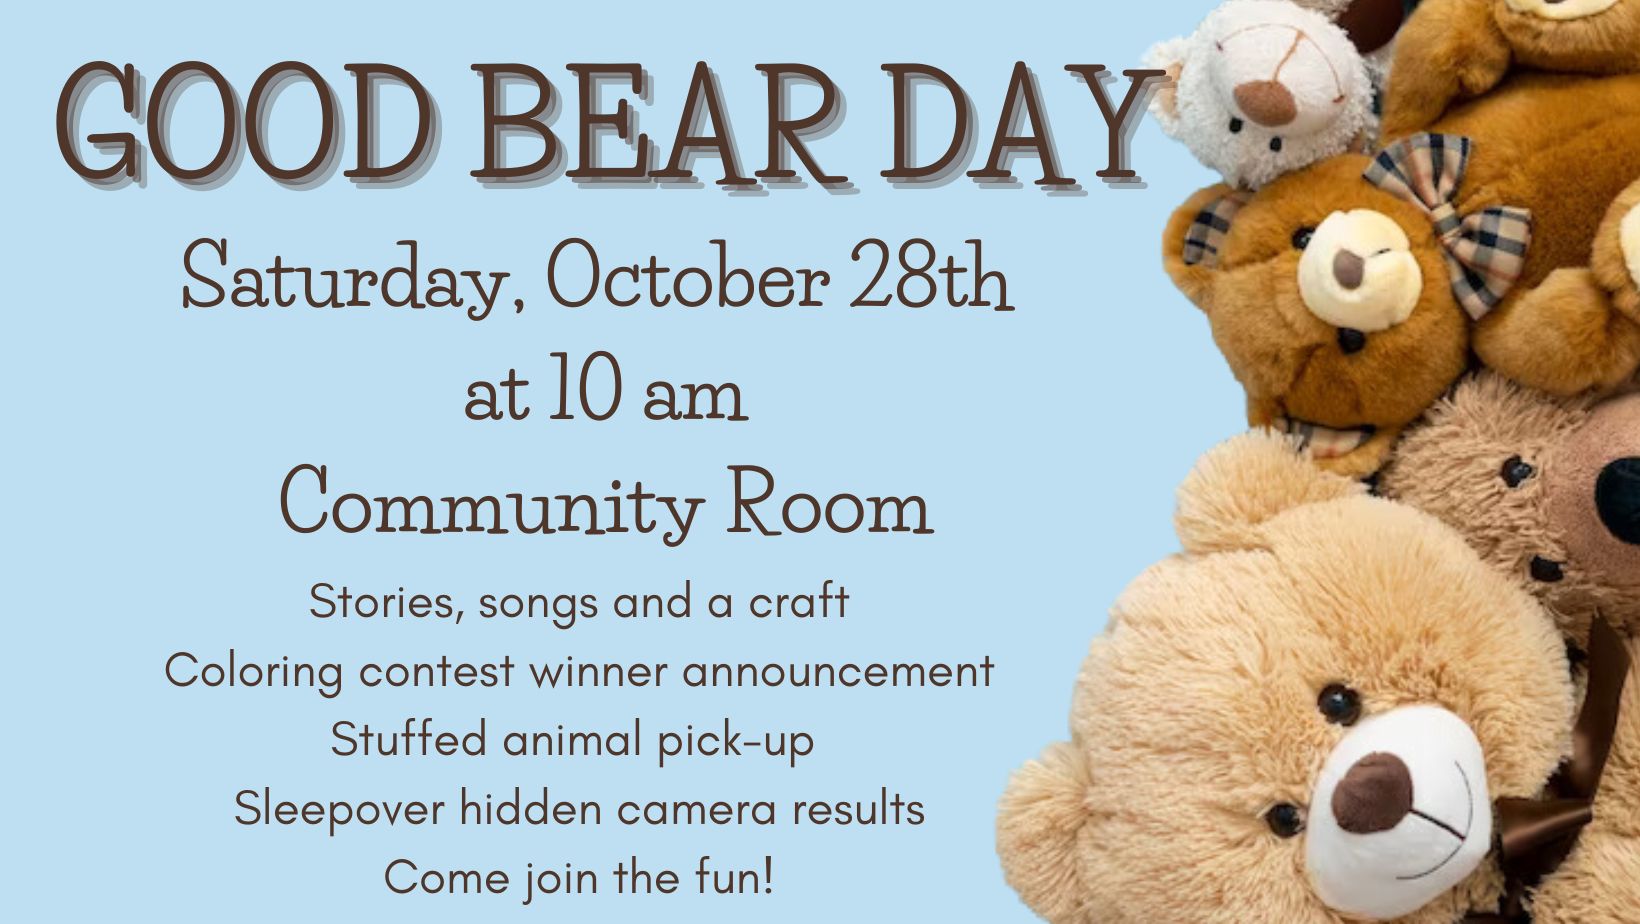 Good Bear Day Saturday October 27th